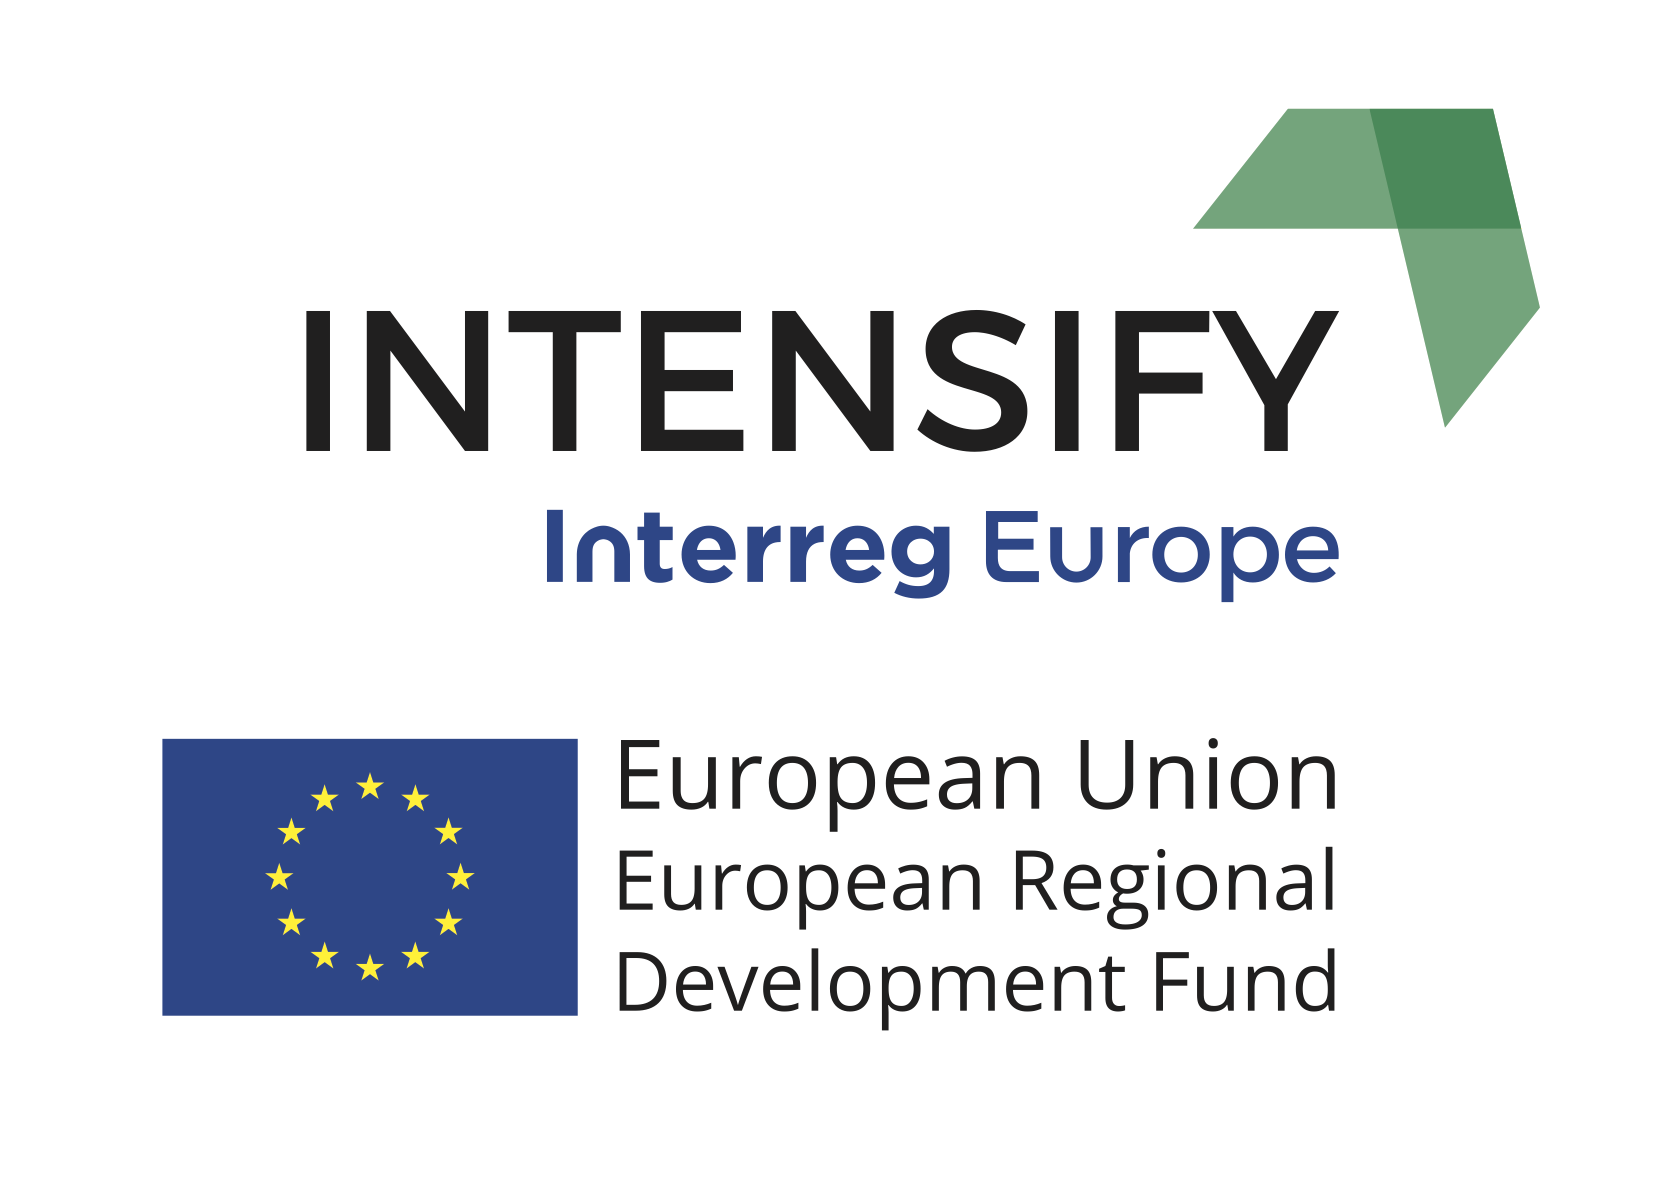 Intesify Interreg Europe